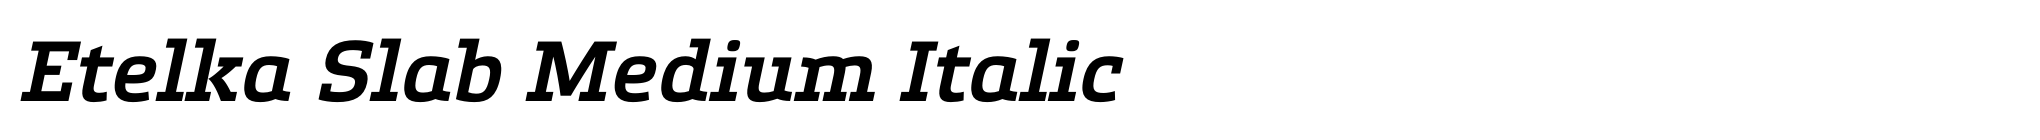 Etelka Slab Medium Italic image